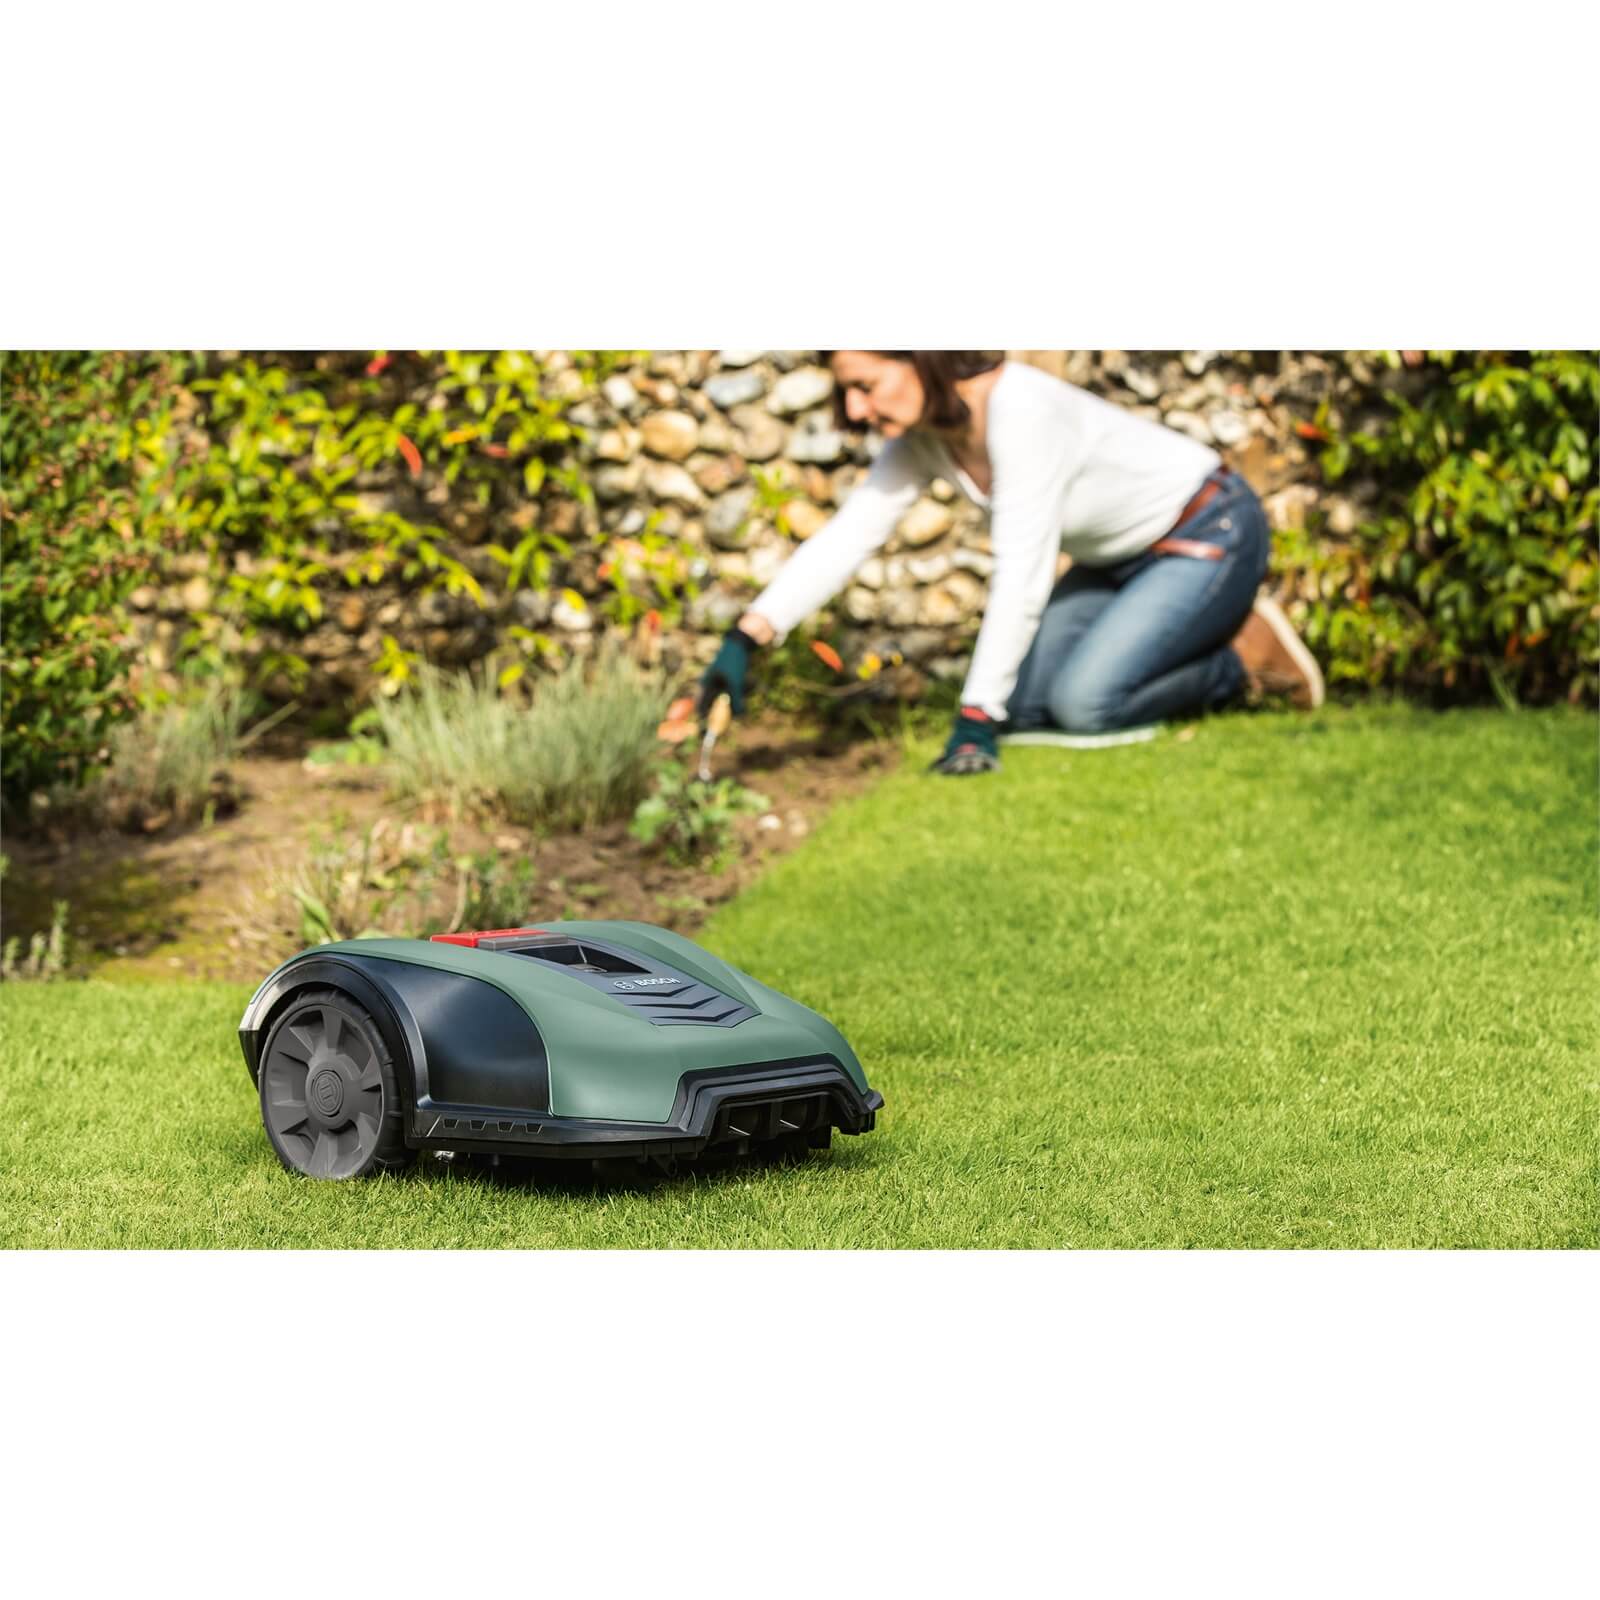 Bosch Indego M+ 700 Robotic Lawnmower